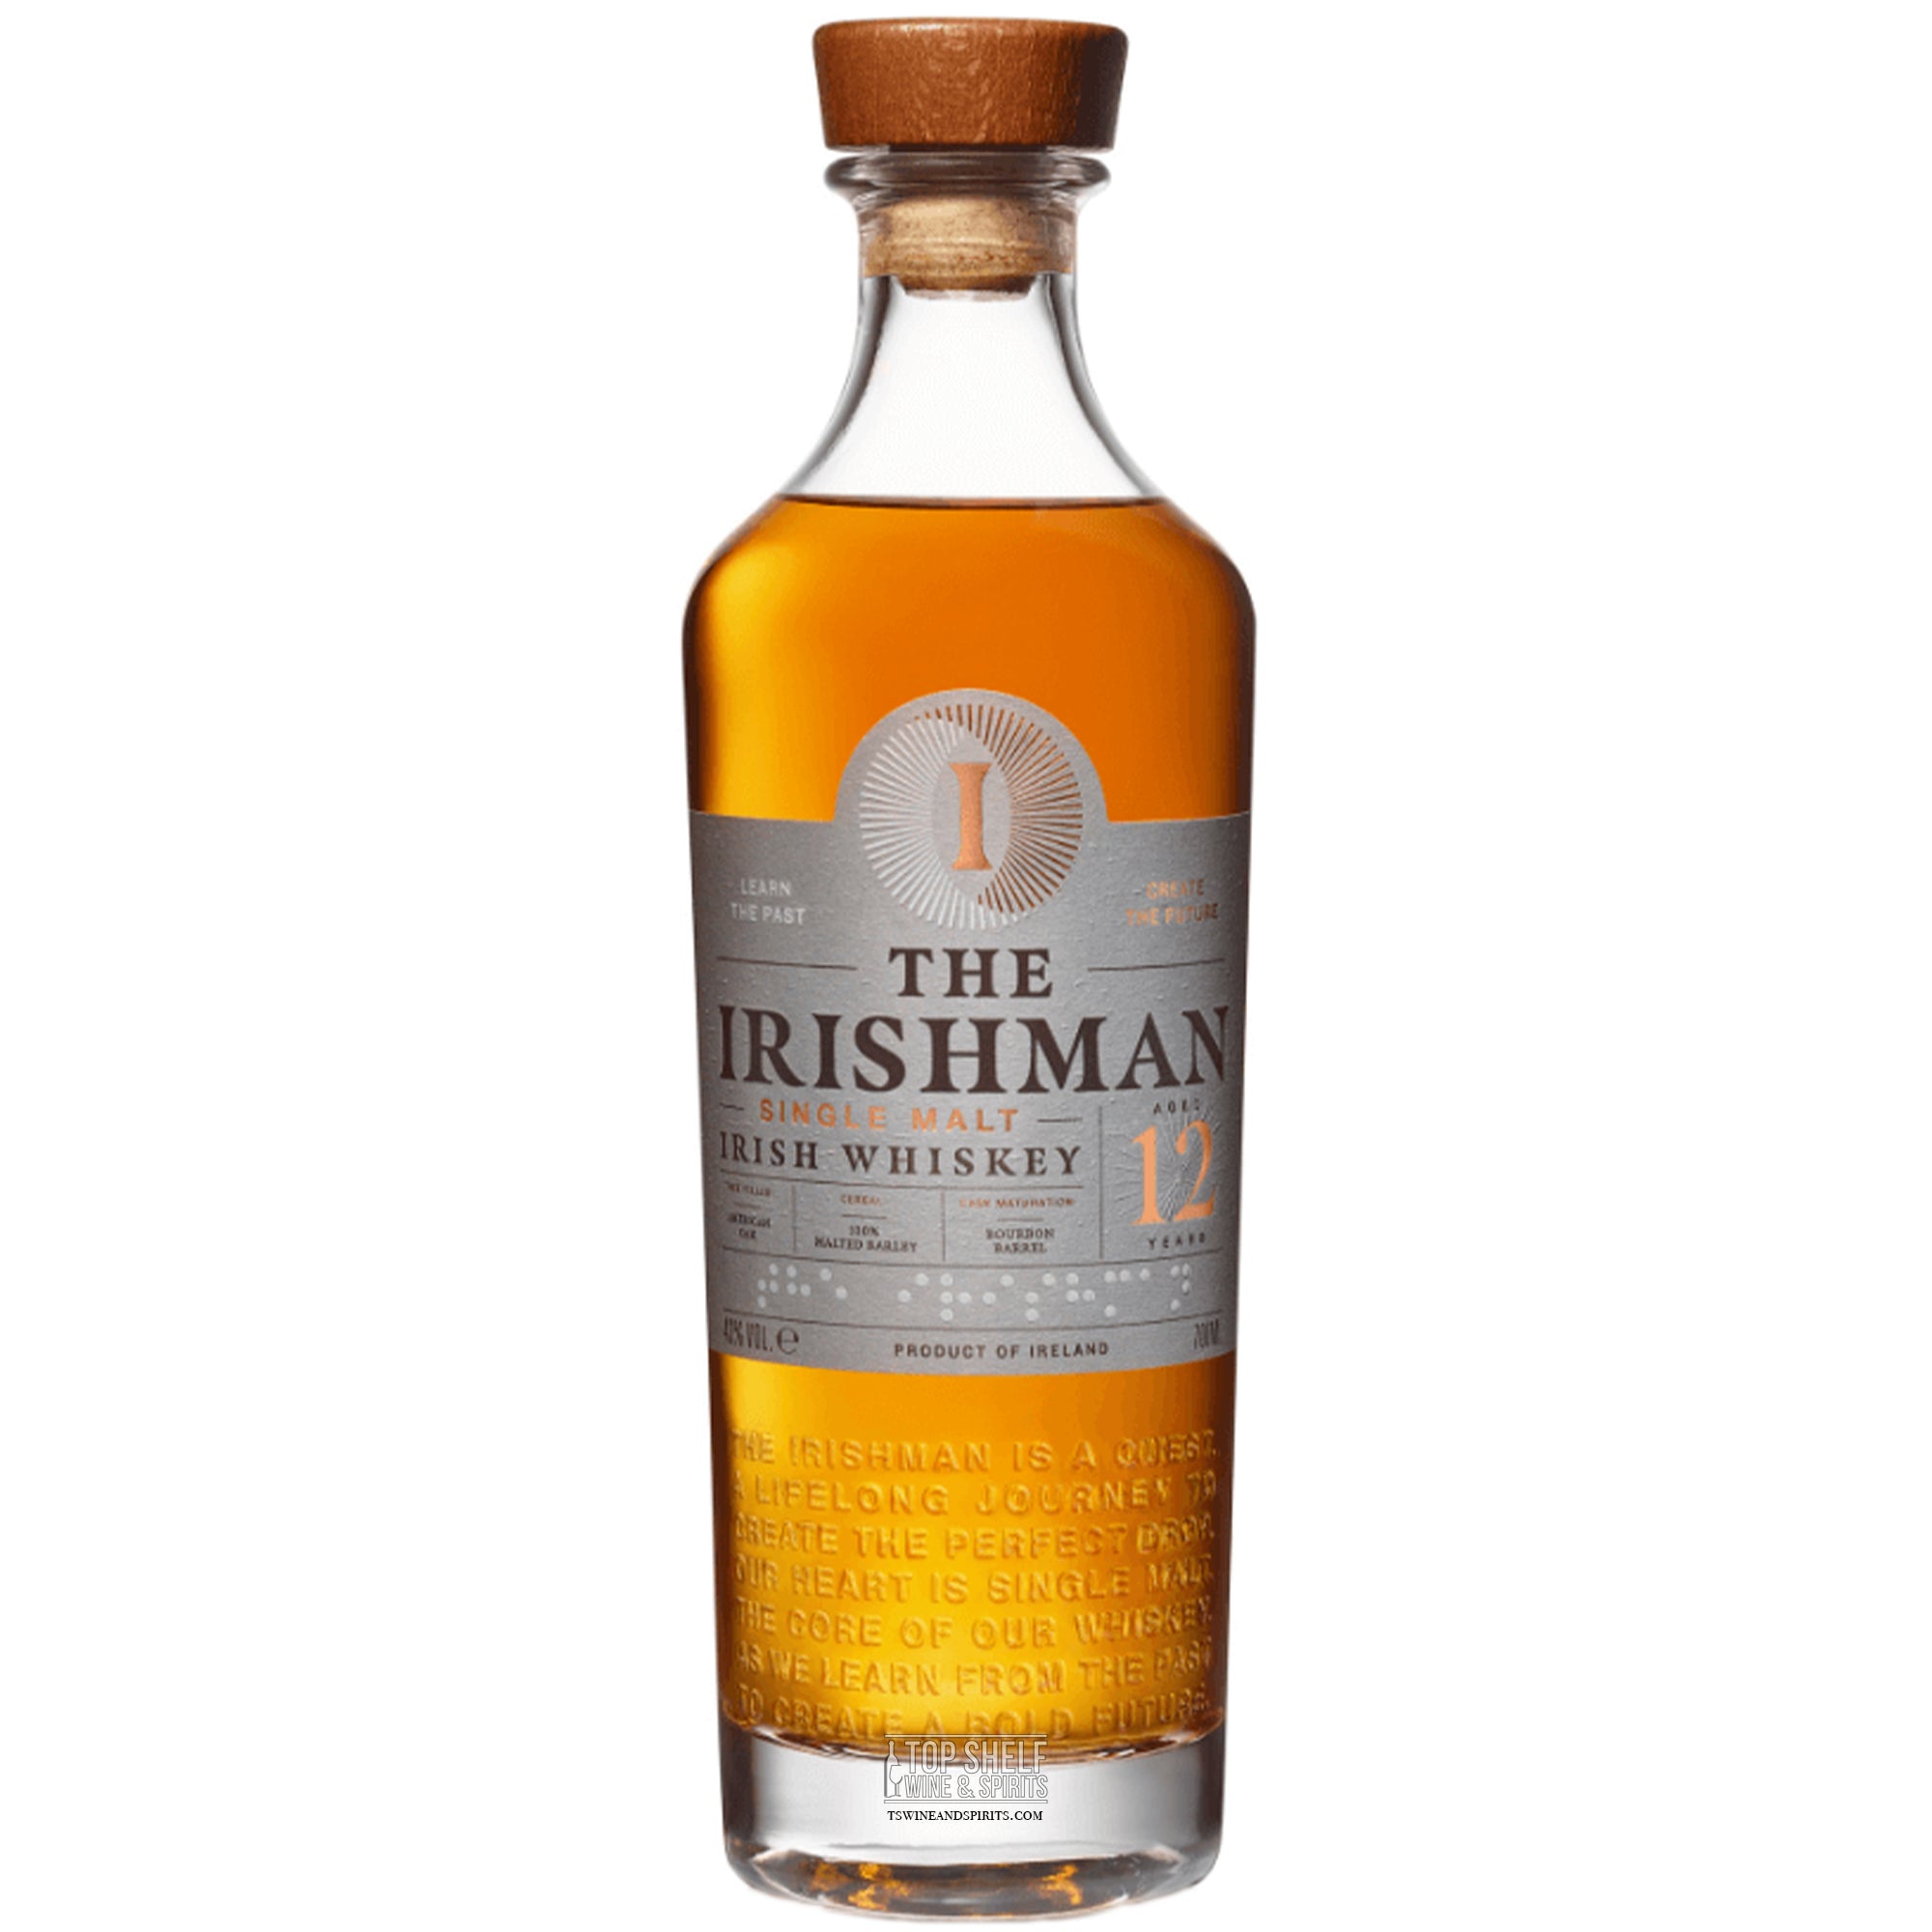 The Irishman 12 Year Single Malt Irish Whisky